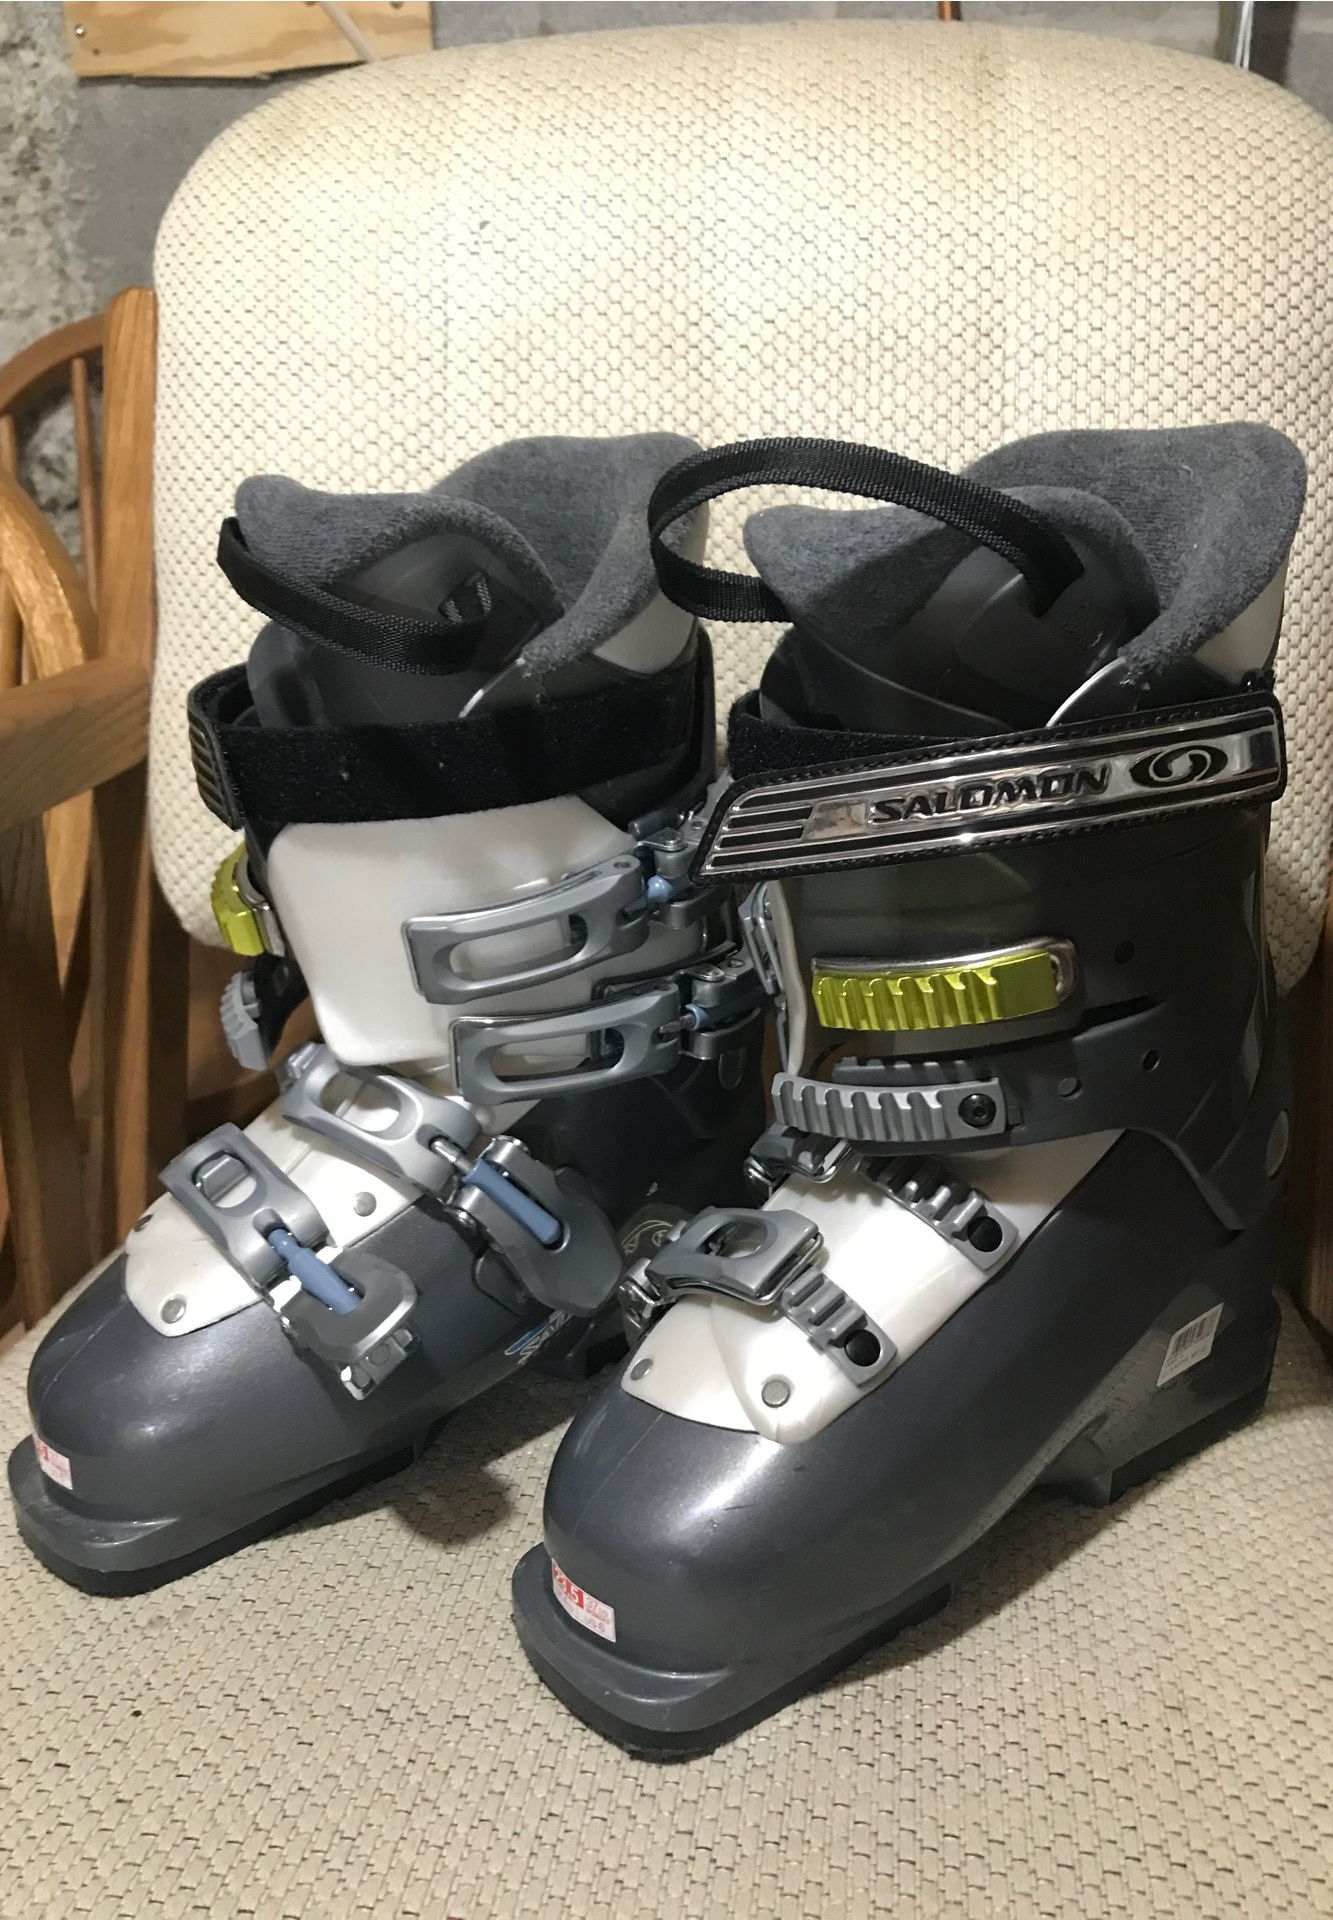 Ski Boots - Salomon Women’s Size 6